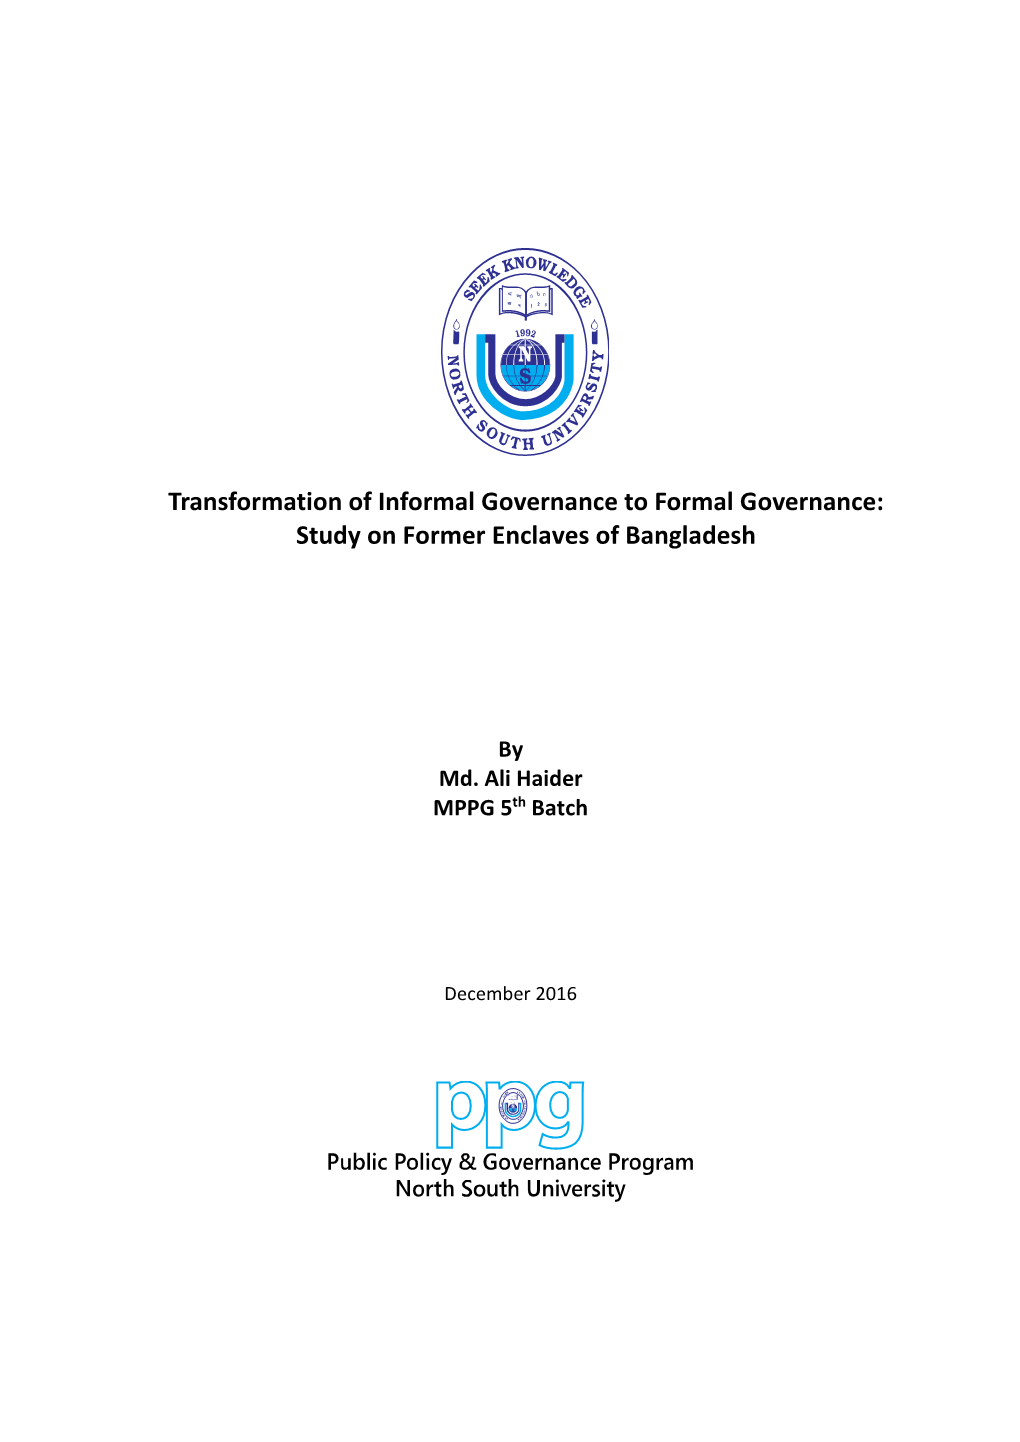 Transformation of Informal Governance to Formal Governance: Study on Former Enclaves of Bangladesh